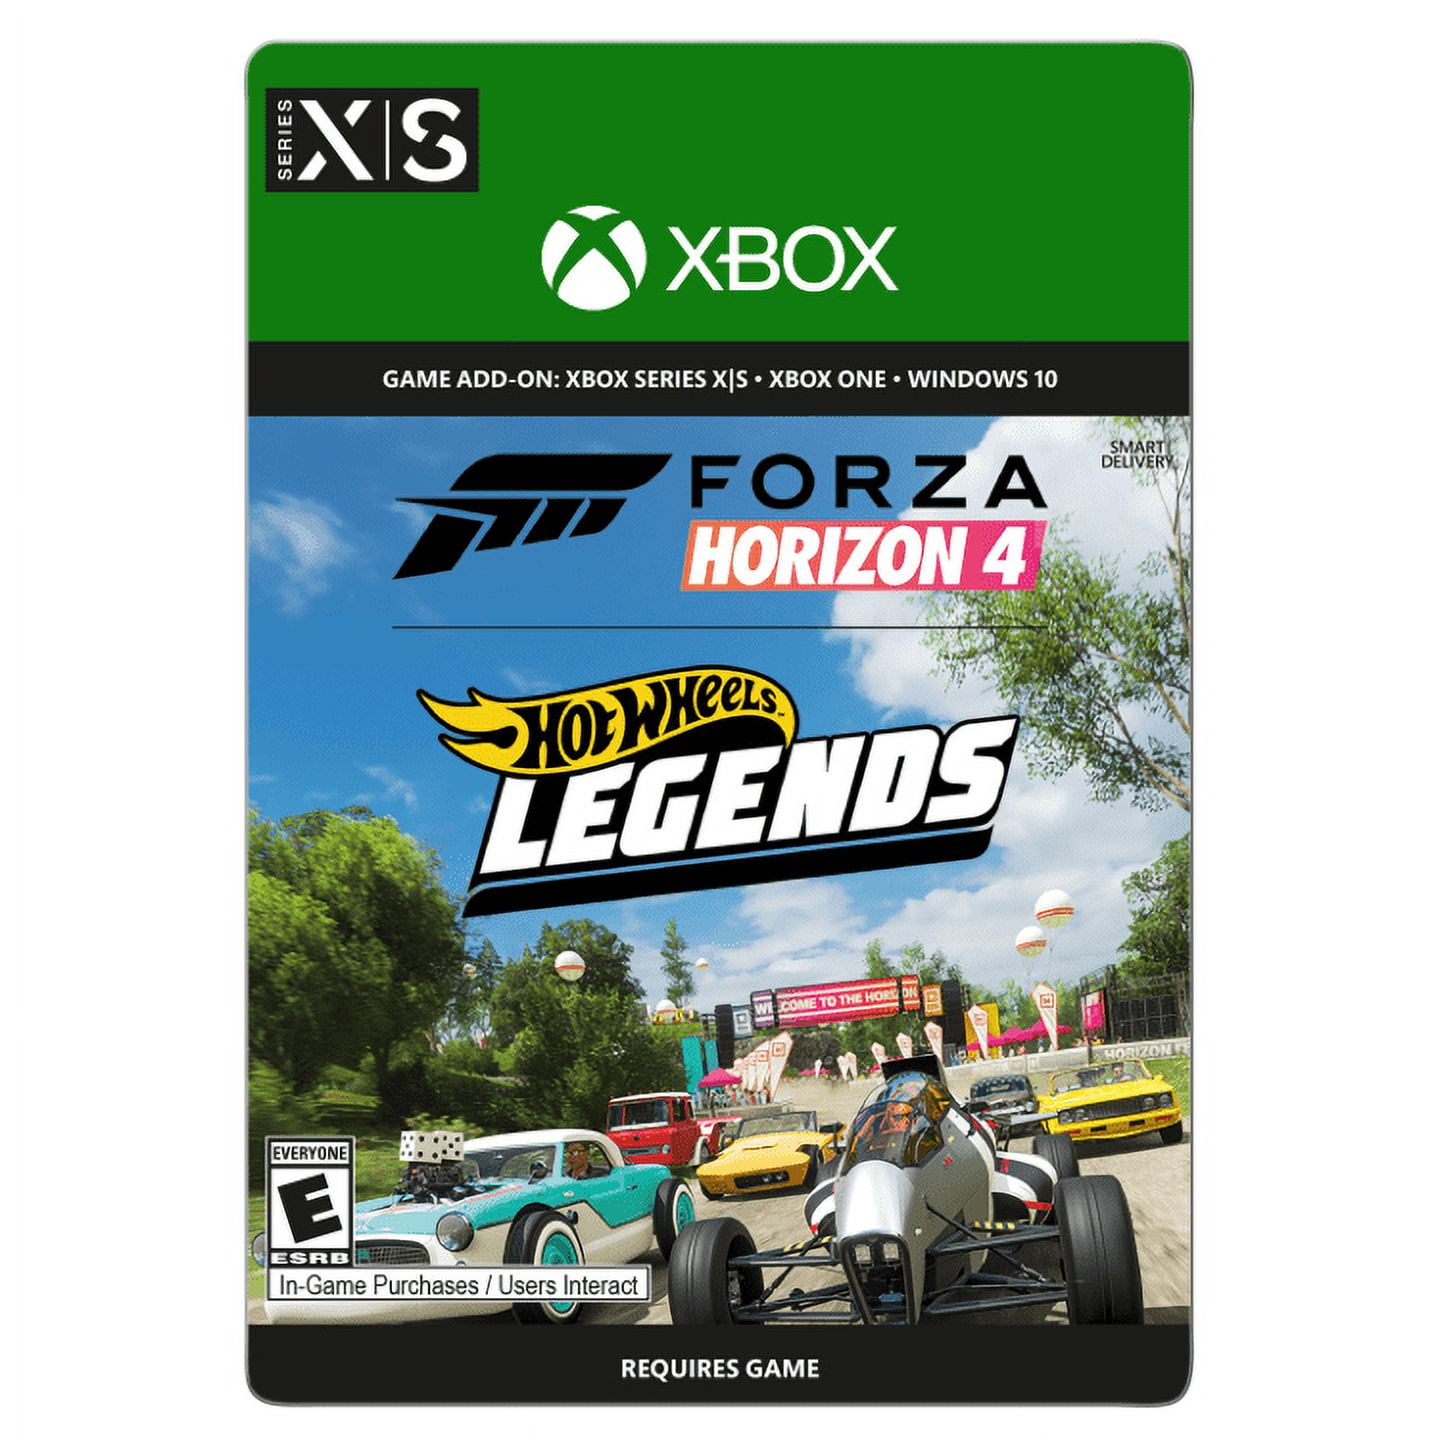 Comprar Forza Horizon 3 Xbox One, CD Key